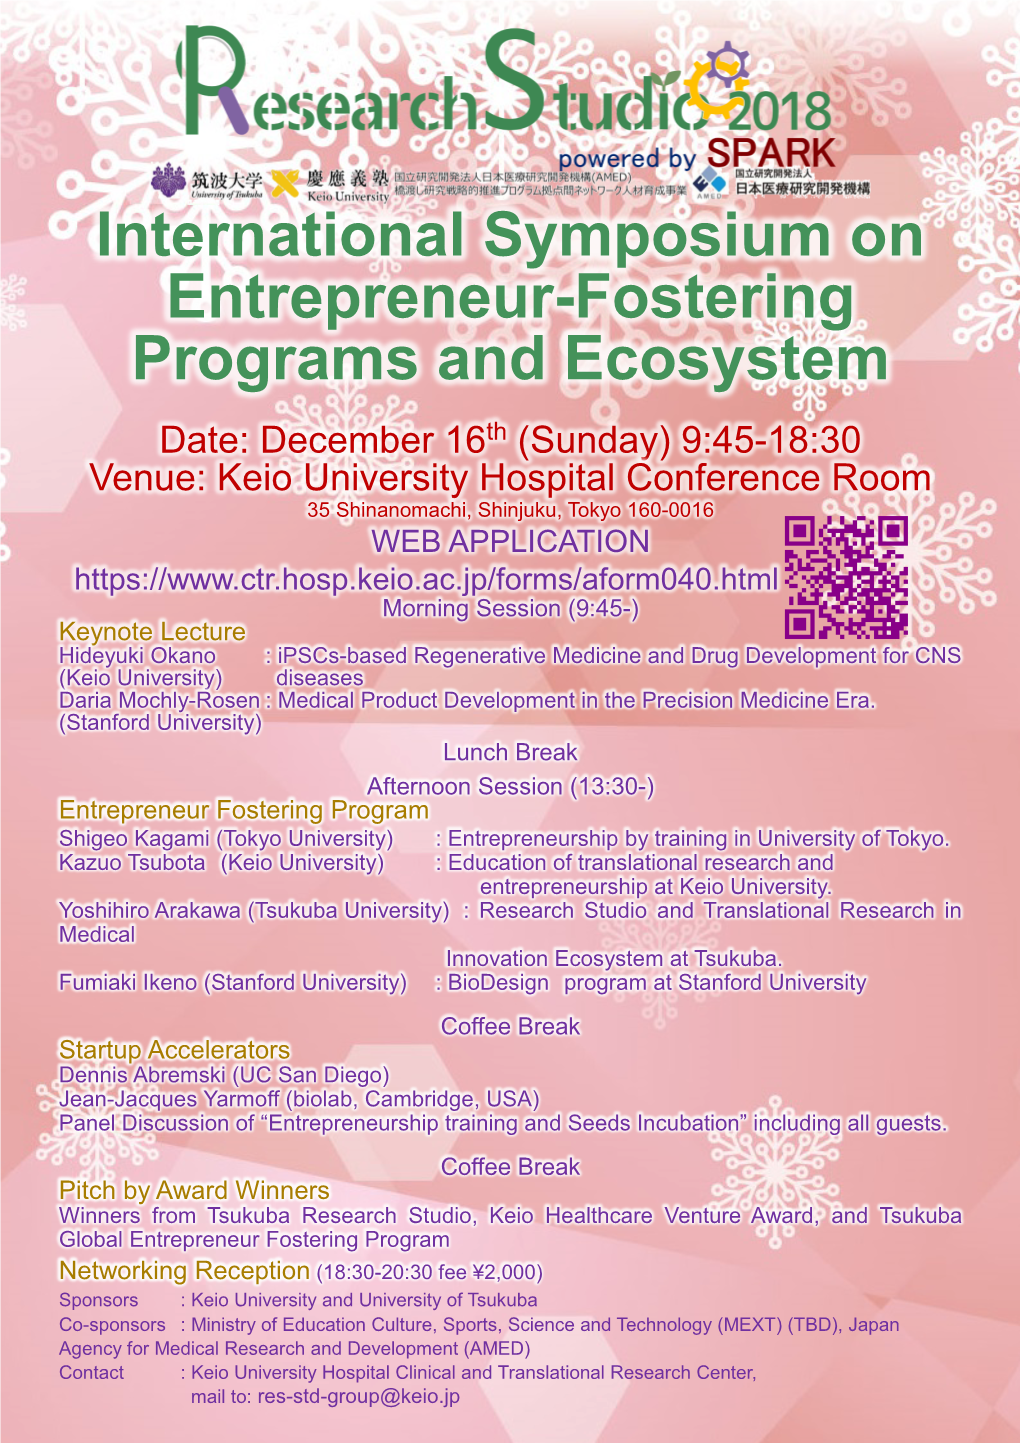 International Symposium on Entrepreneur-Fostering Programs and Ecosystem